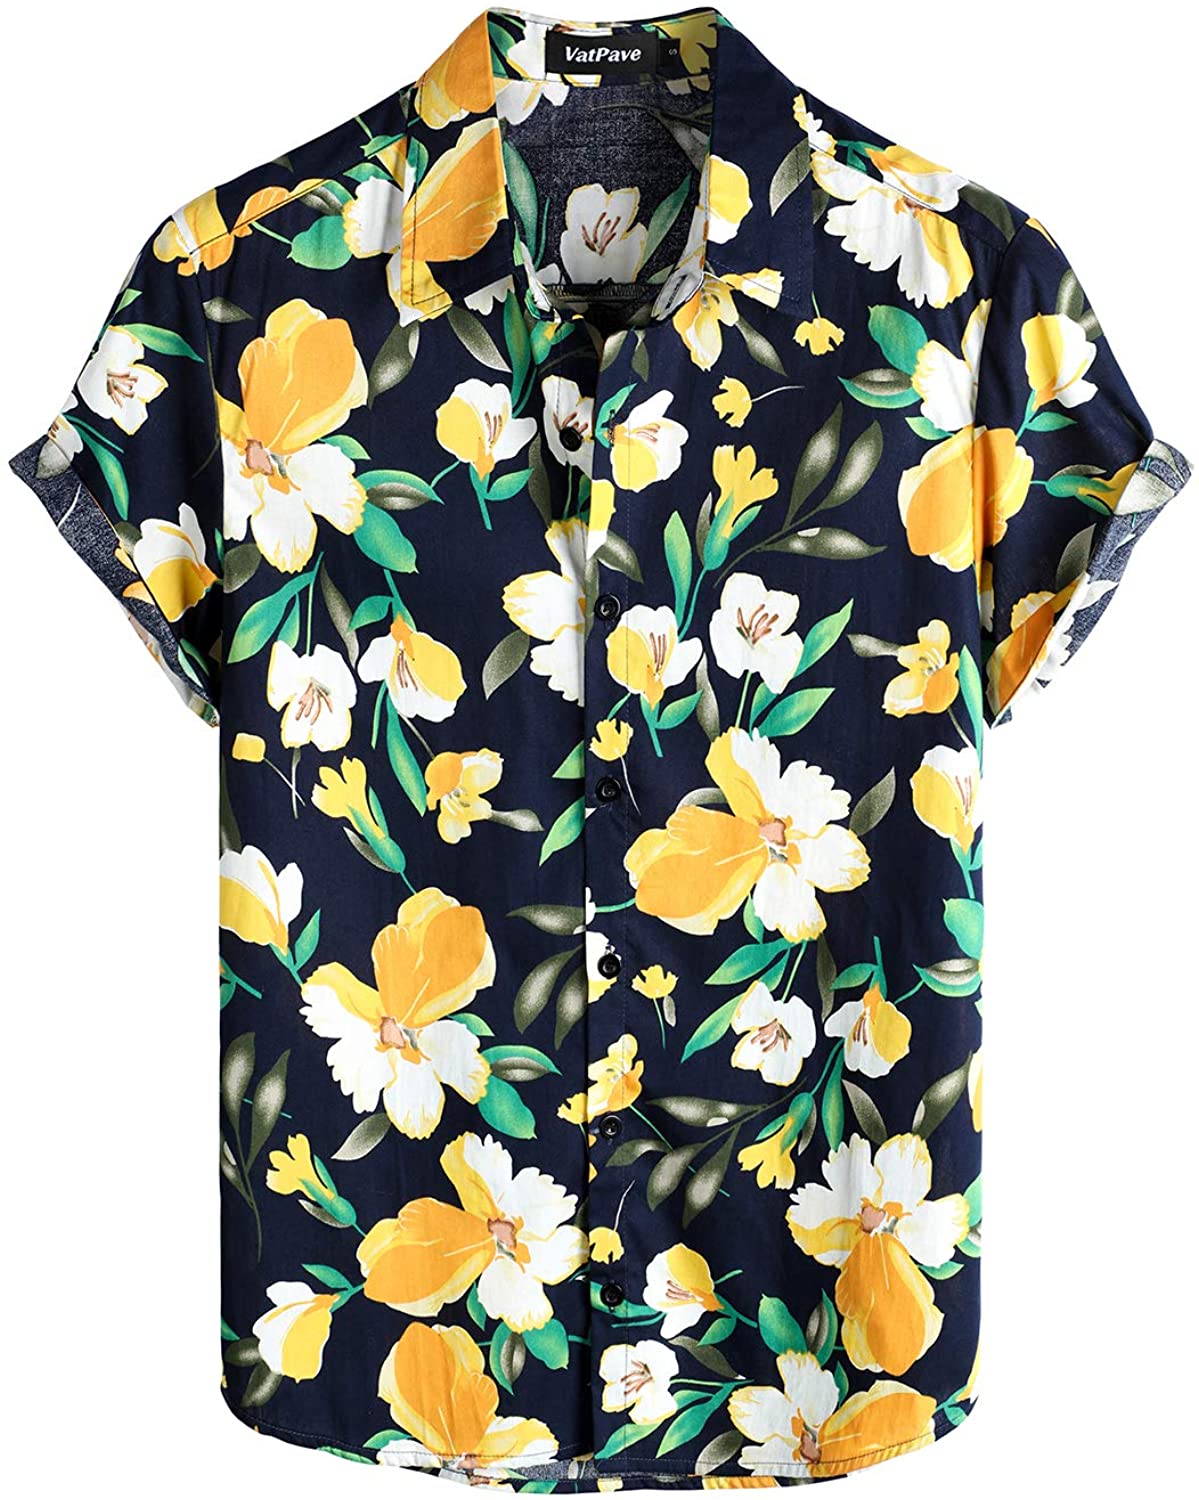 VATPAVE Mens 100% Cotton Hawaiian Shirts Button Down Short Sleeve Beach Shirts Summer Casual Aloha Shirts 